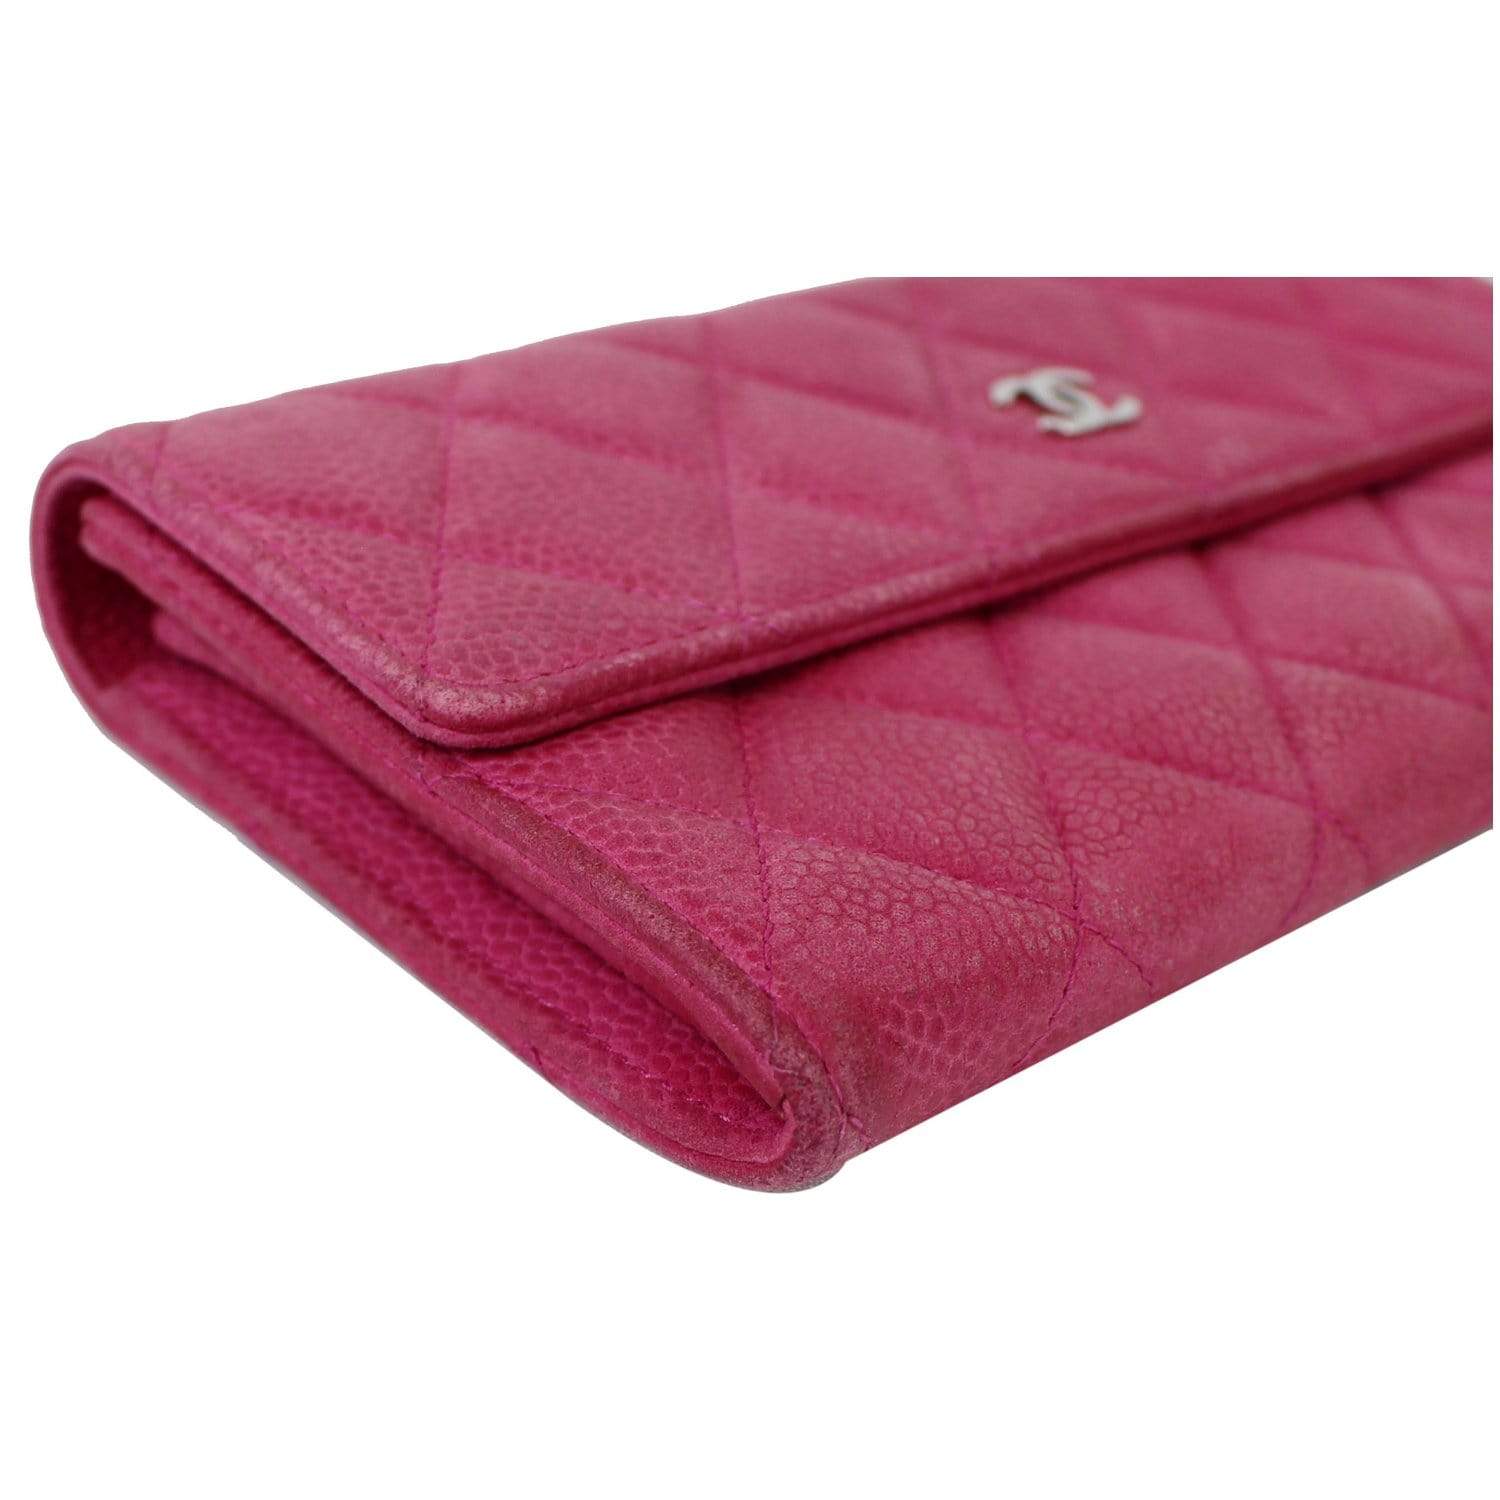 Chanel Pink Caviar Leather Bi-fold Wallet Chanel